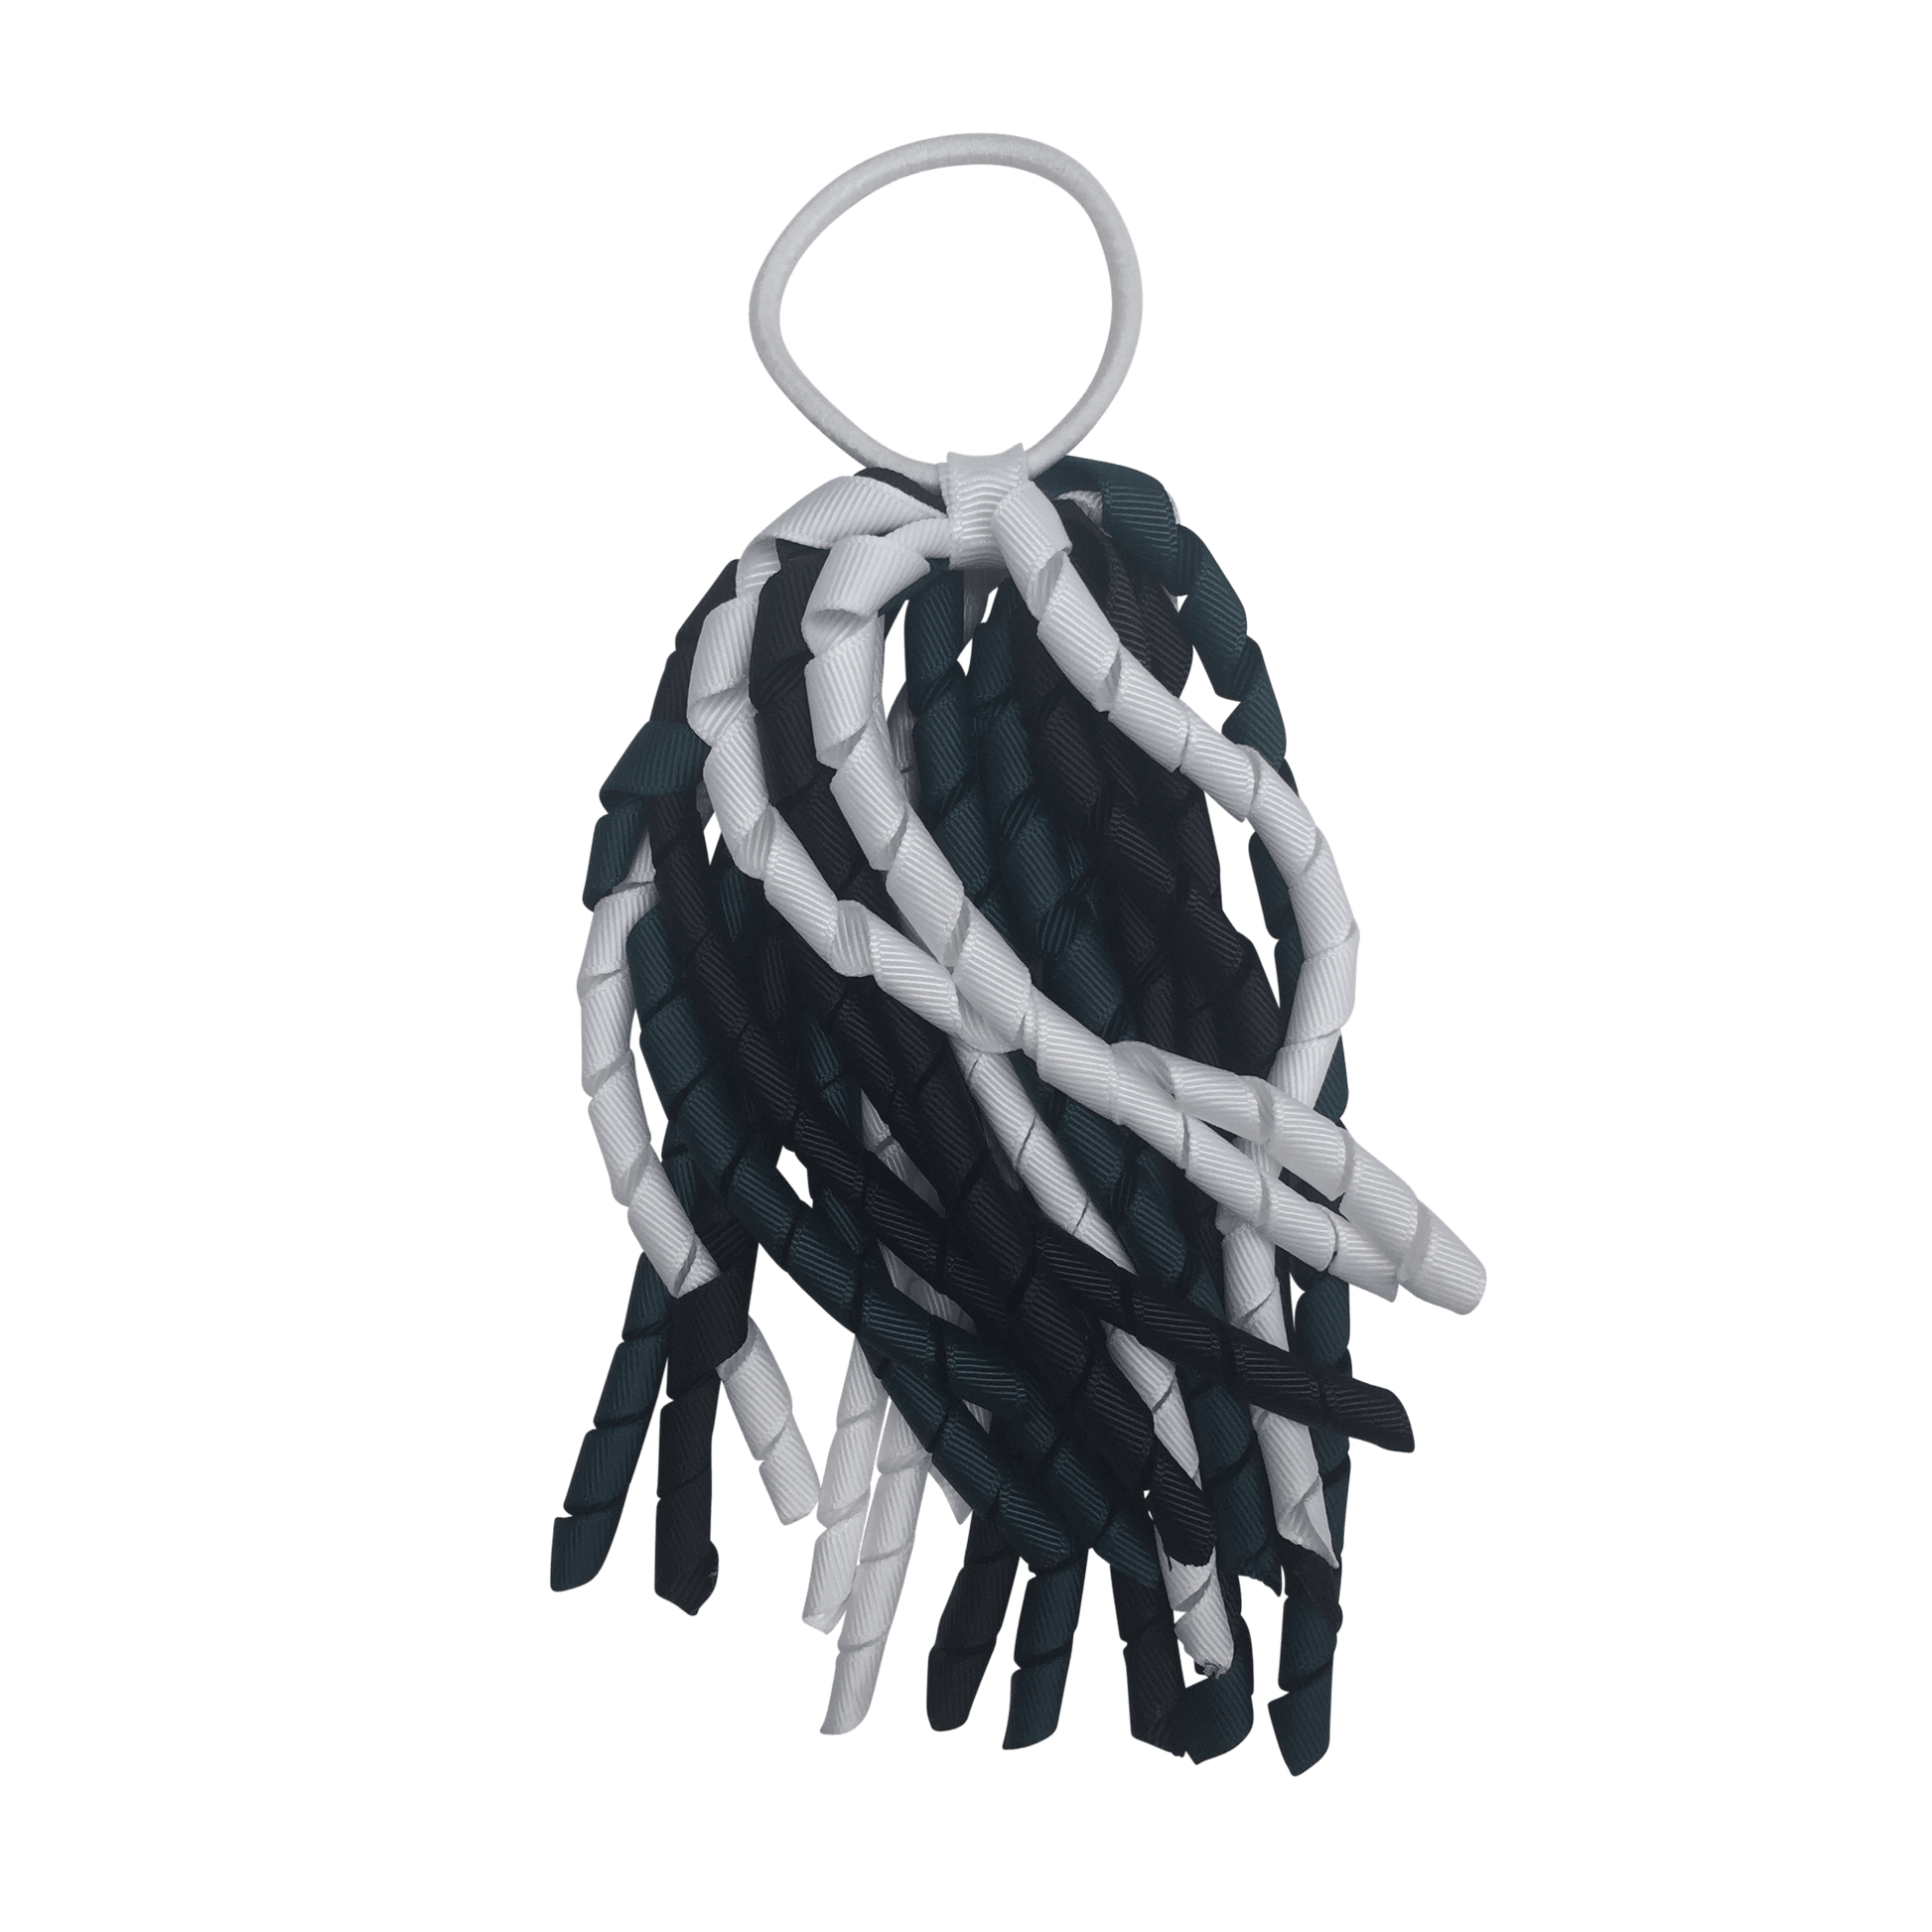 Darkest Petrol Green & Black & White Hair Accessories - Ponytails and Fairytales